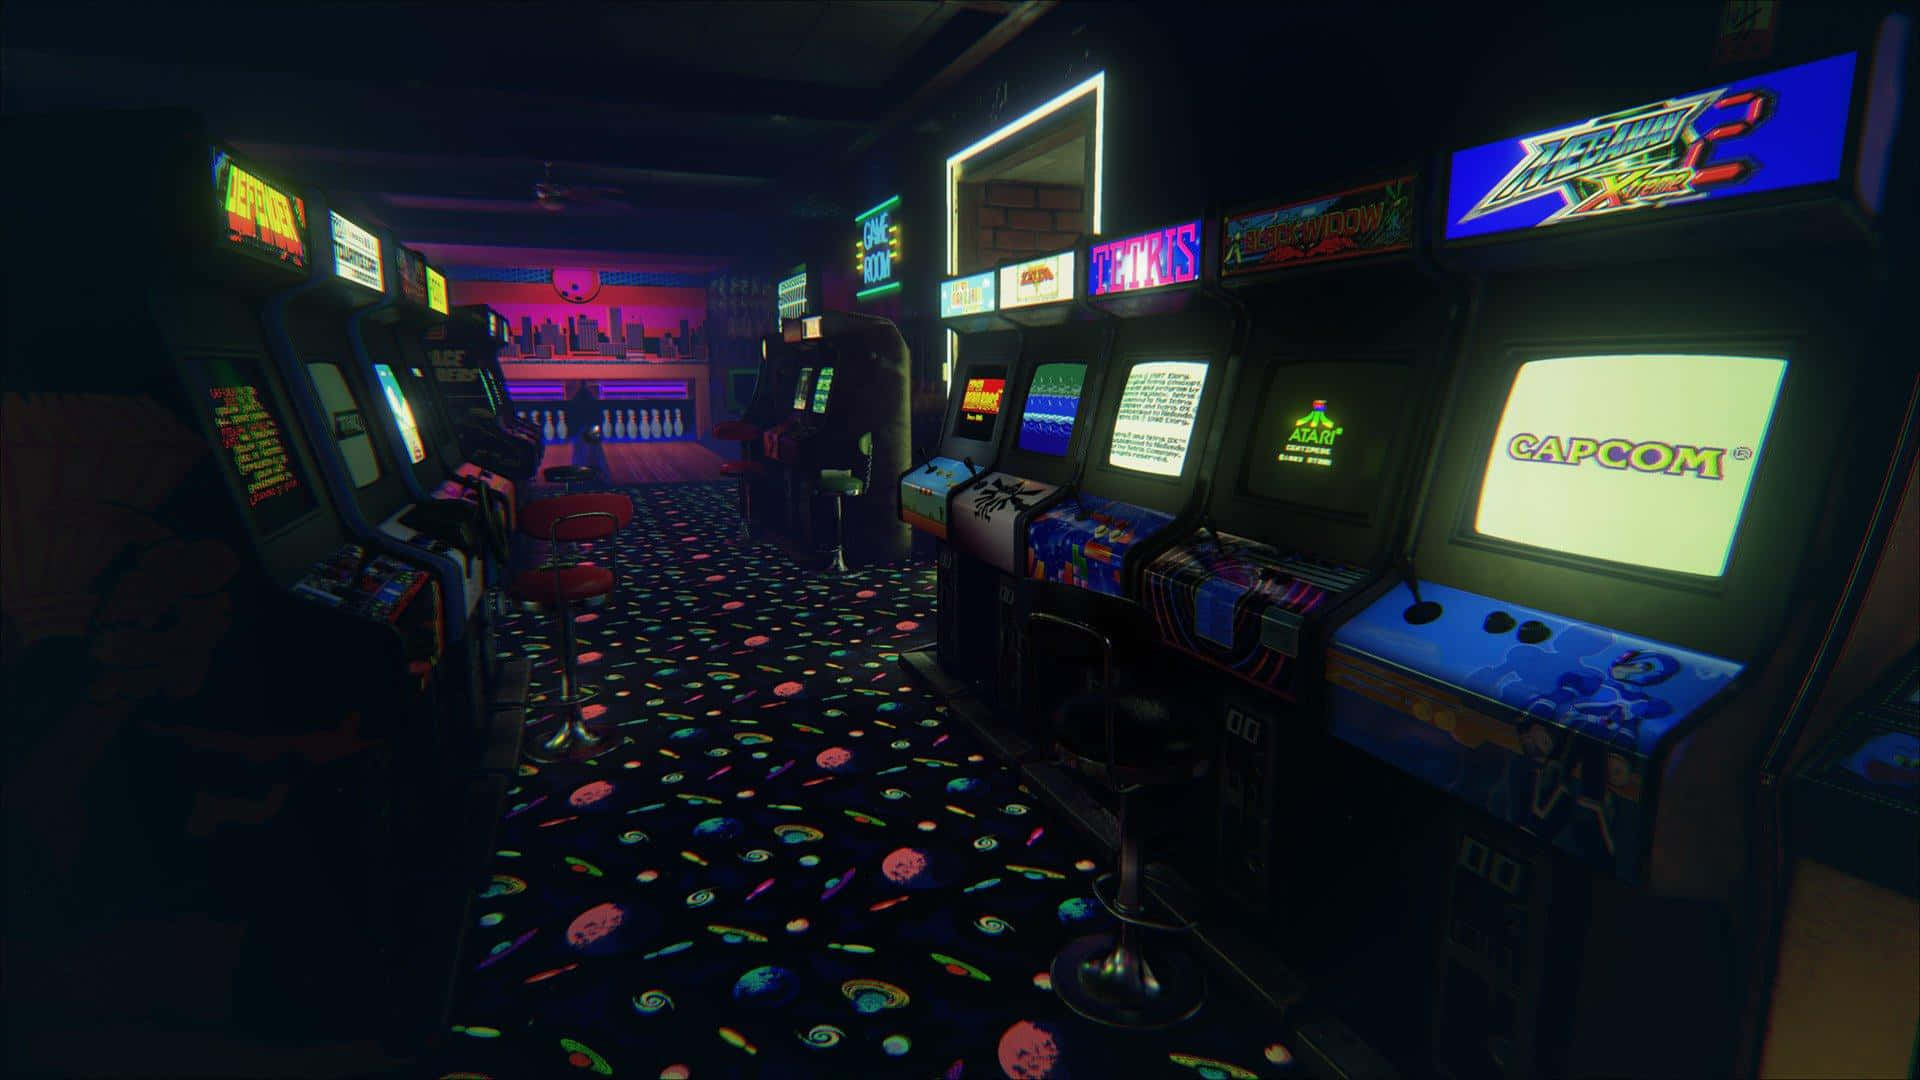 A Hallway With Many Arcade Machines